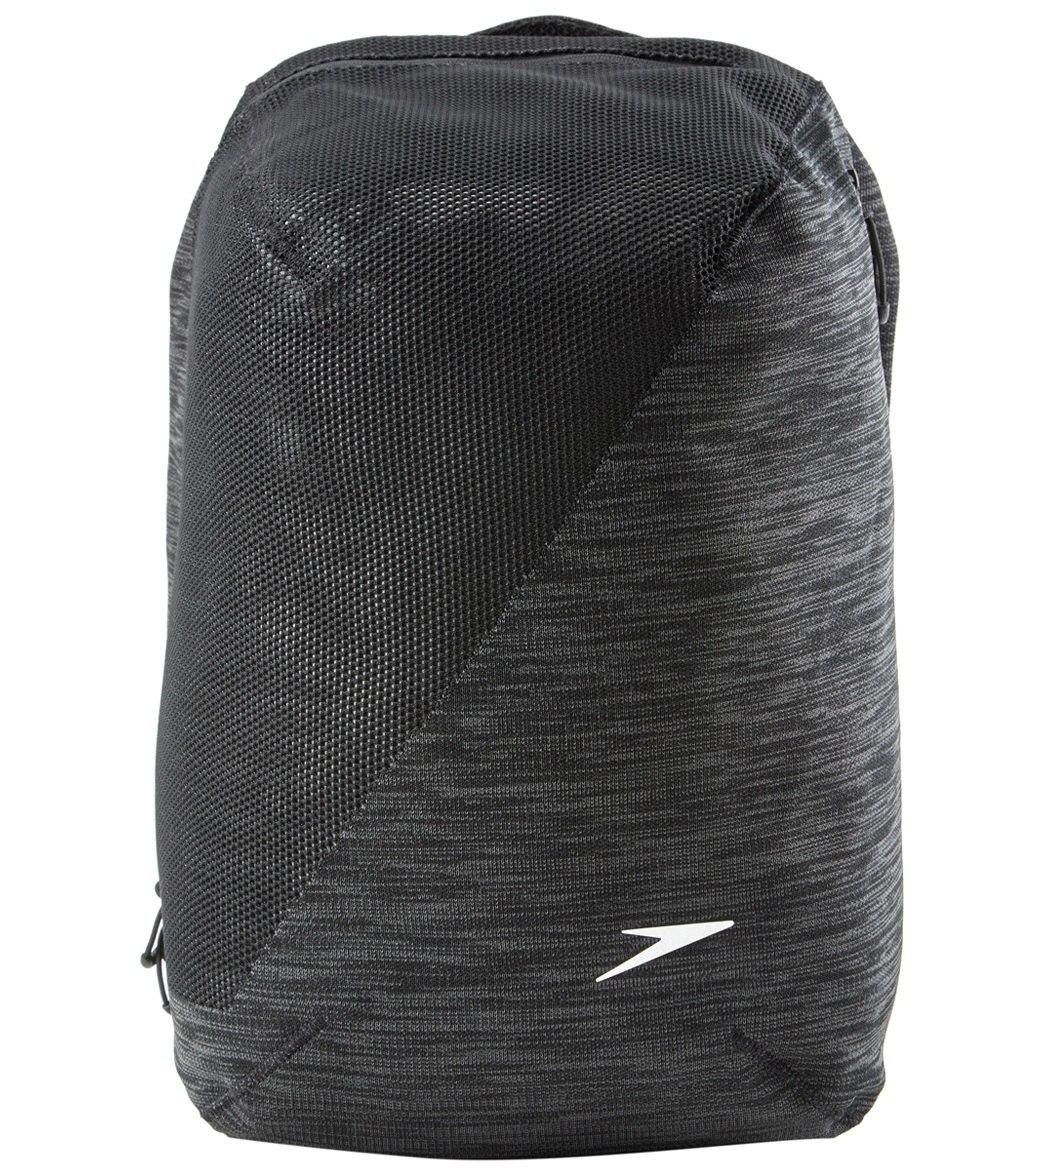 Speedo Hyla Backpack - Black/Grey - Swimoutlet.com